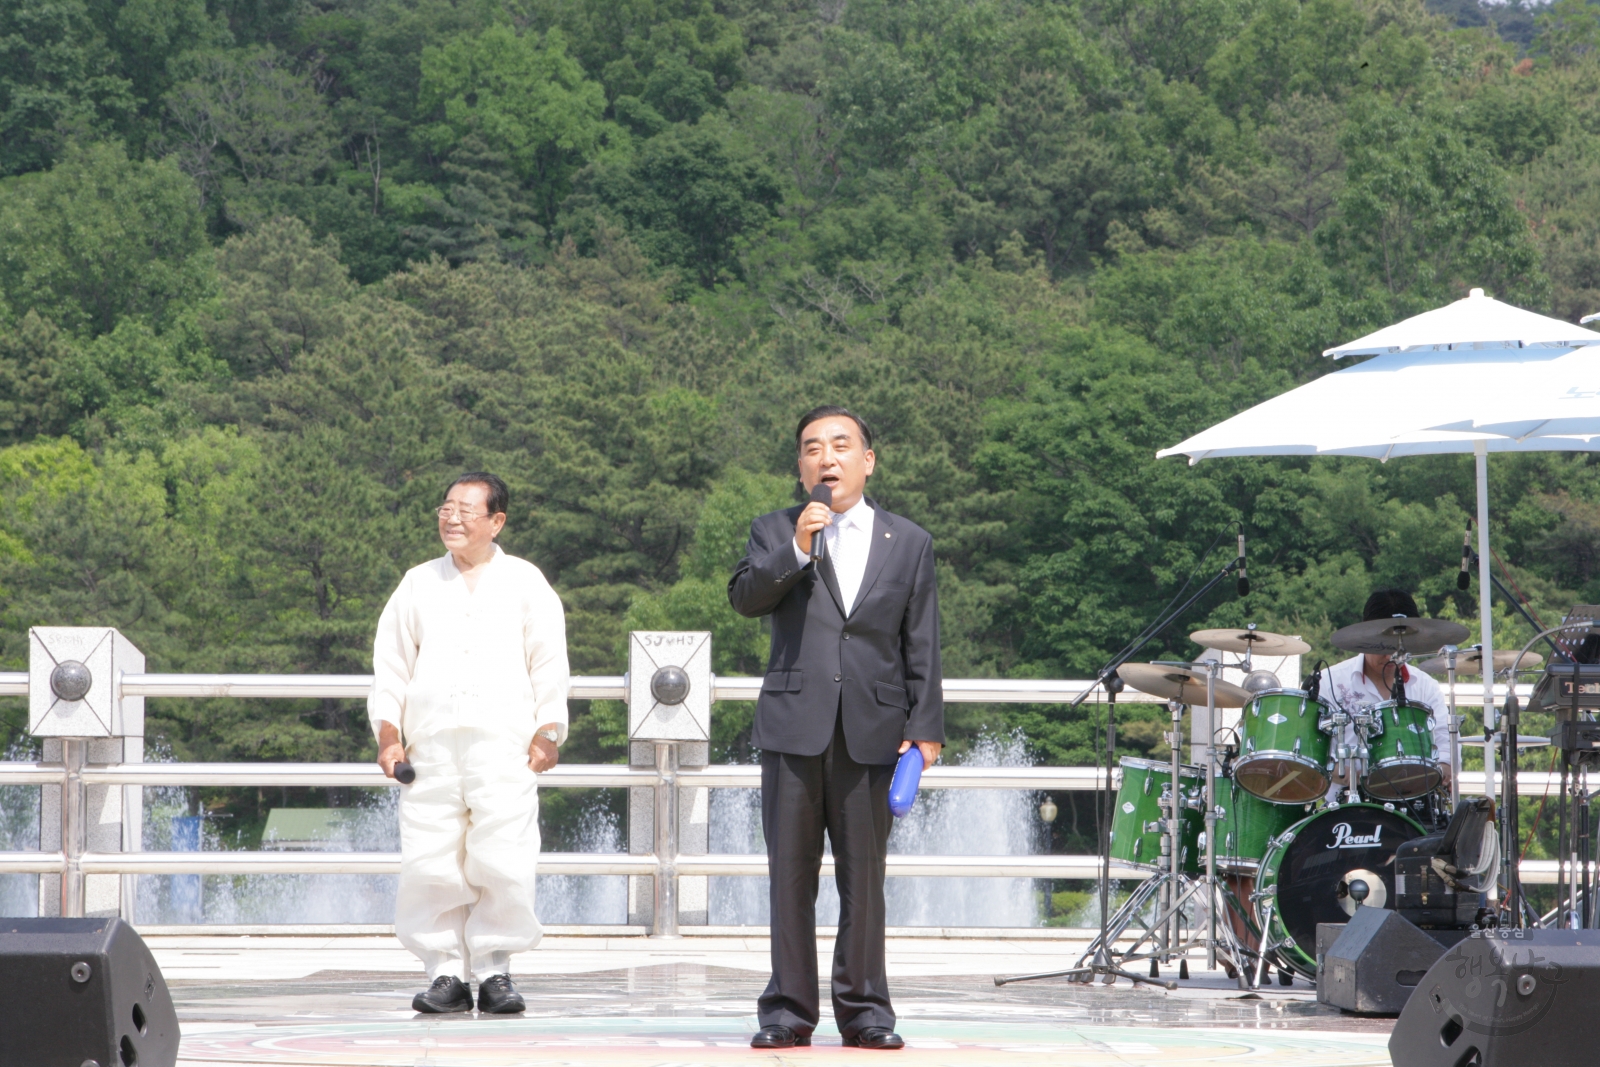 KBS전국노래자랑 울산남구편 의 사진